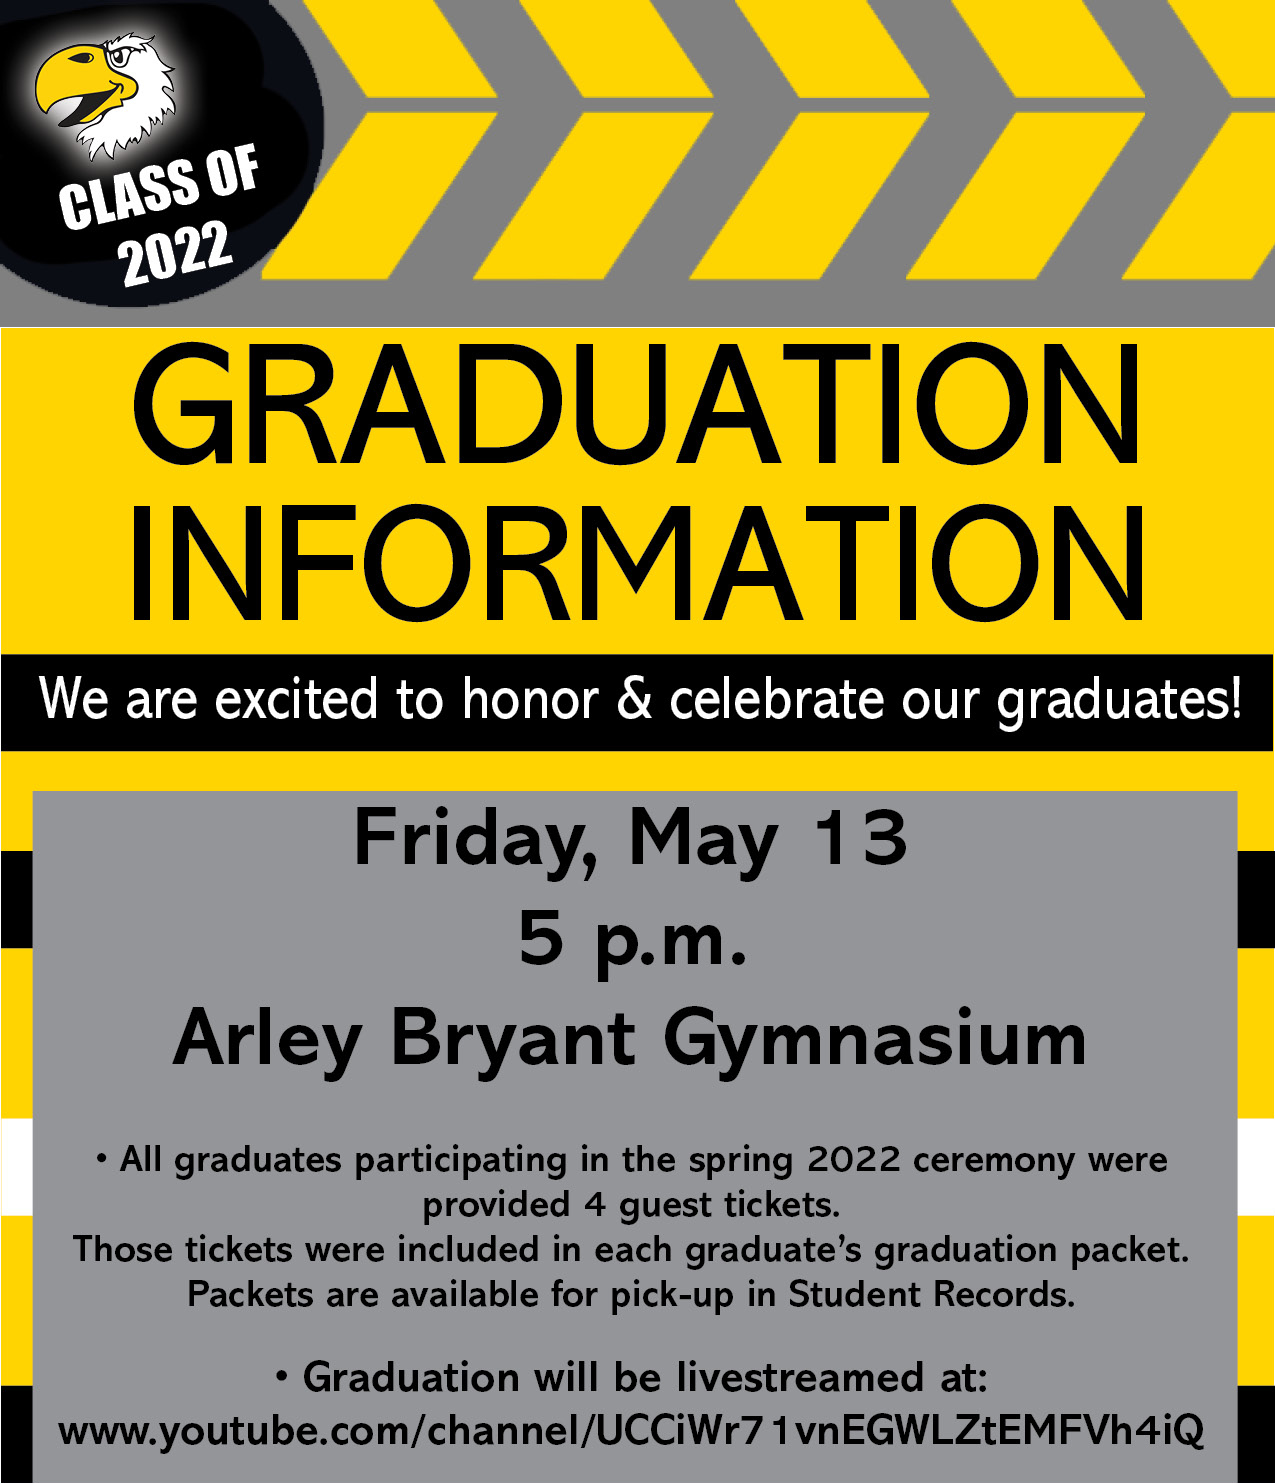 Graduation is May 13, 2022.